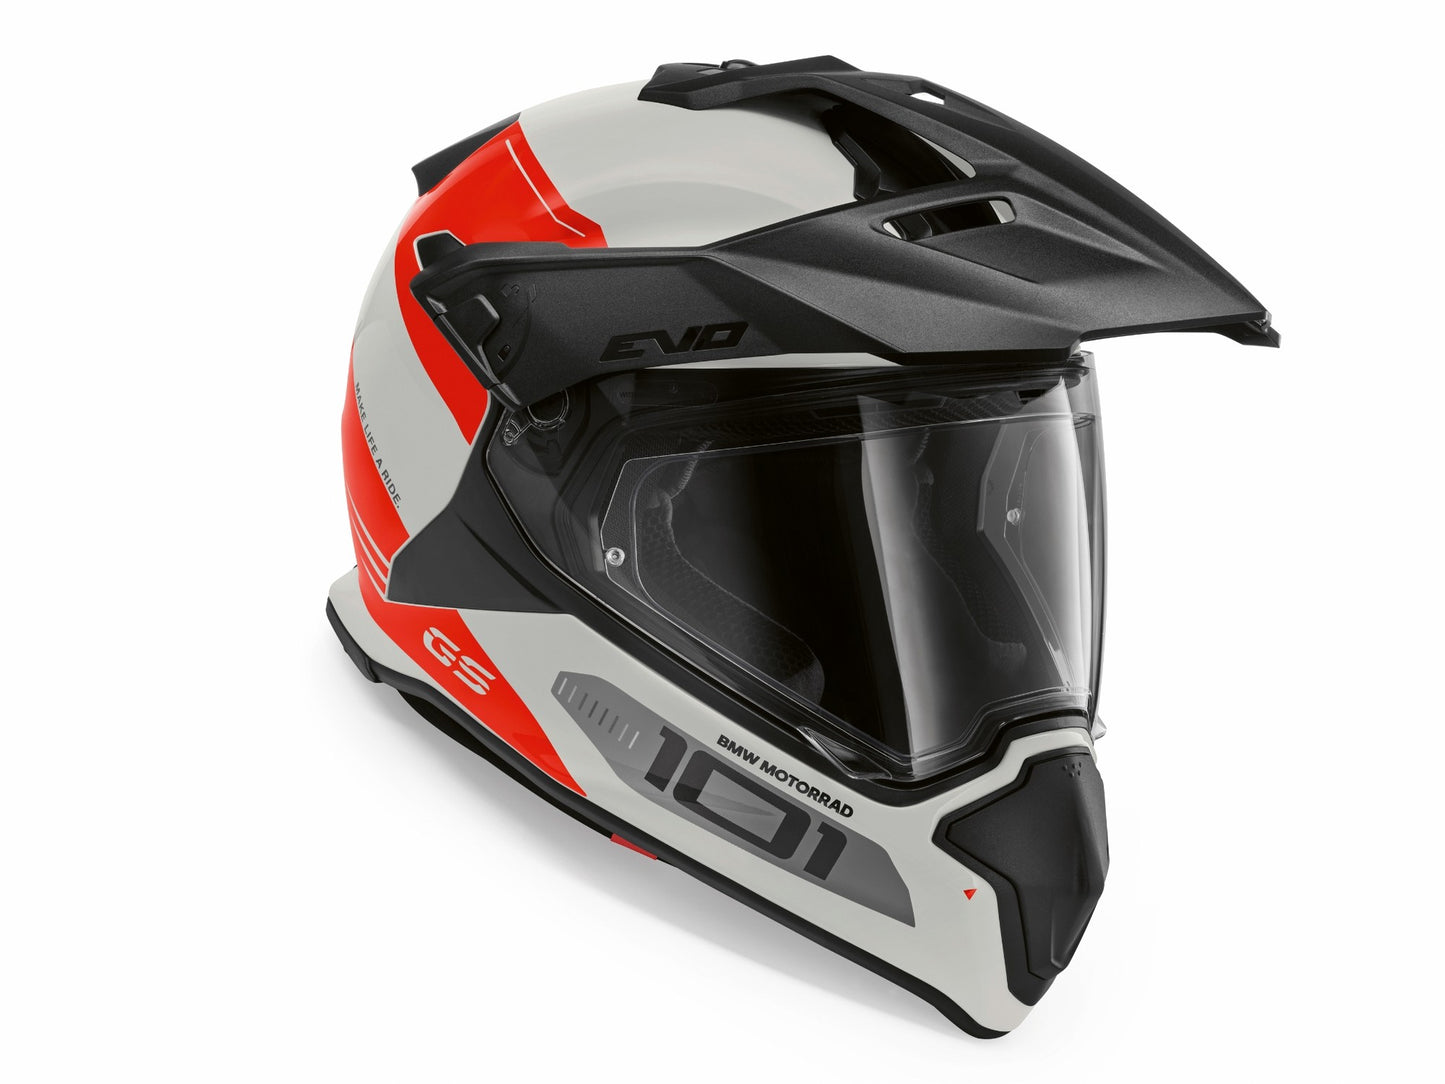 GS Carbon Evo helmet "Xtreme"